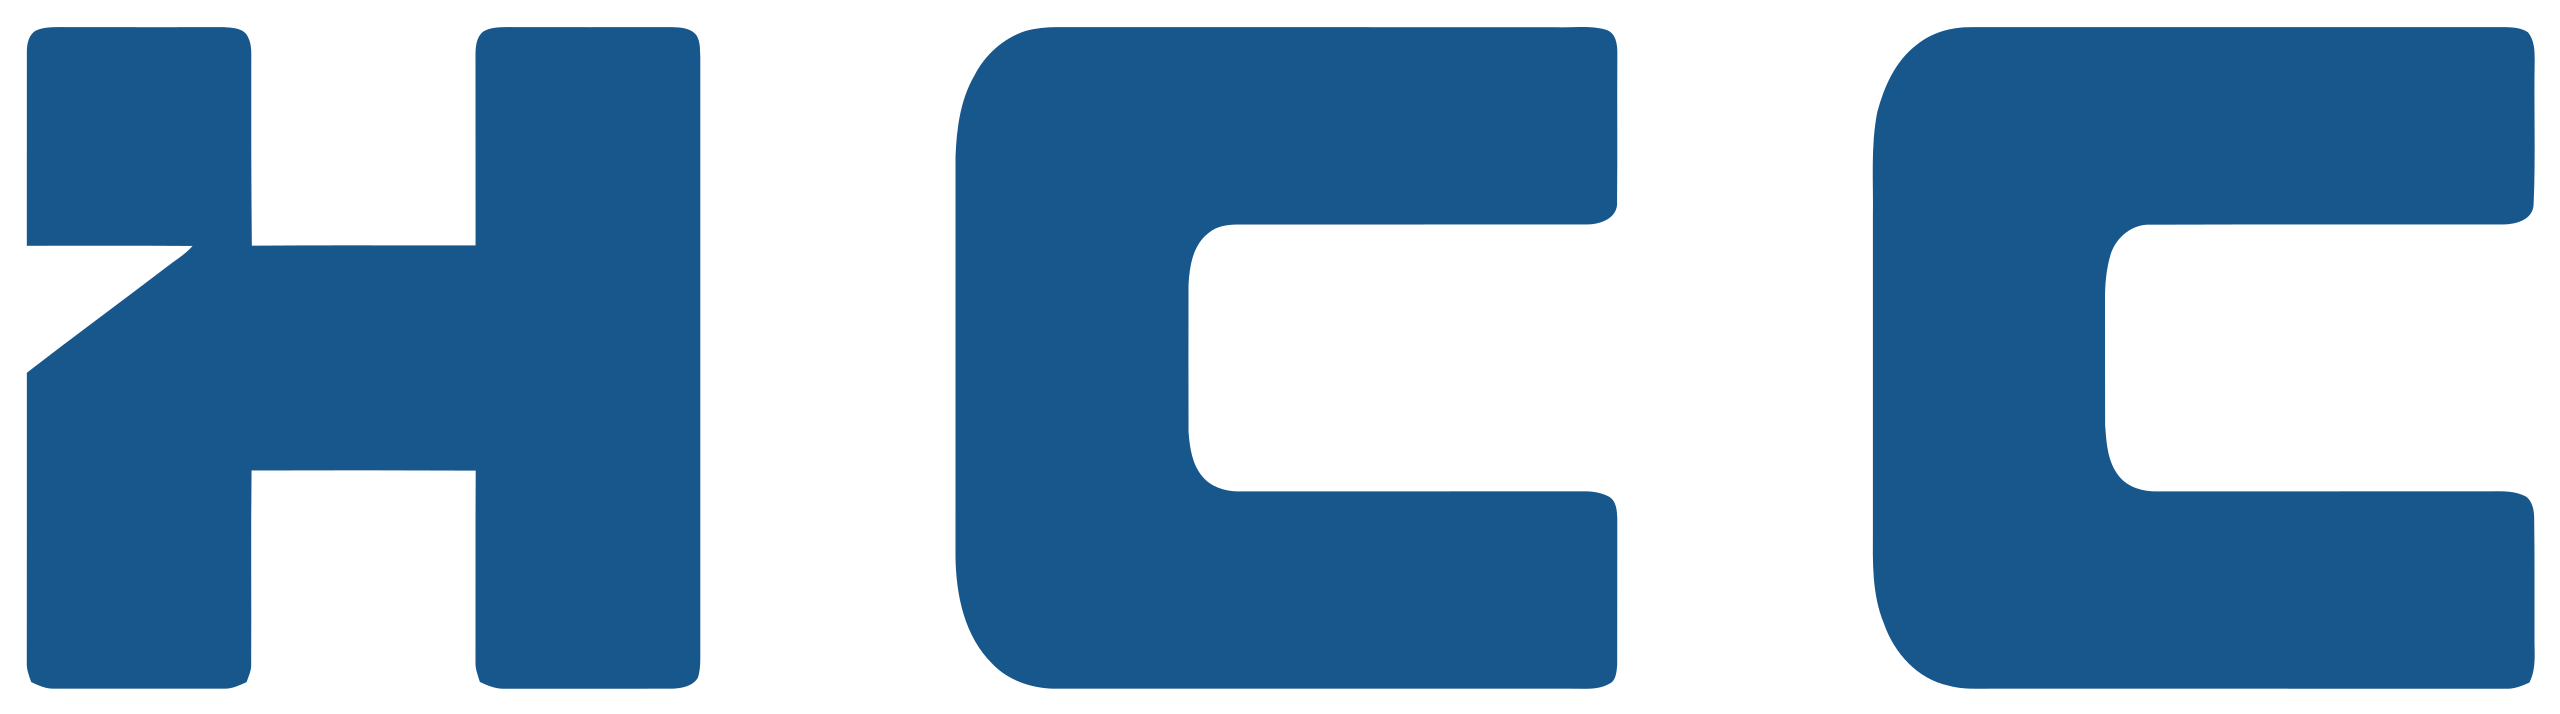 Hindustan_Construction_Company_logo.svg